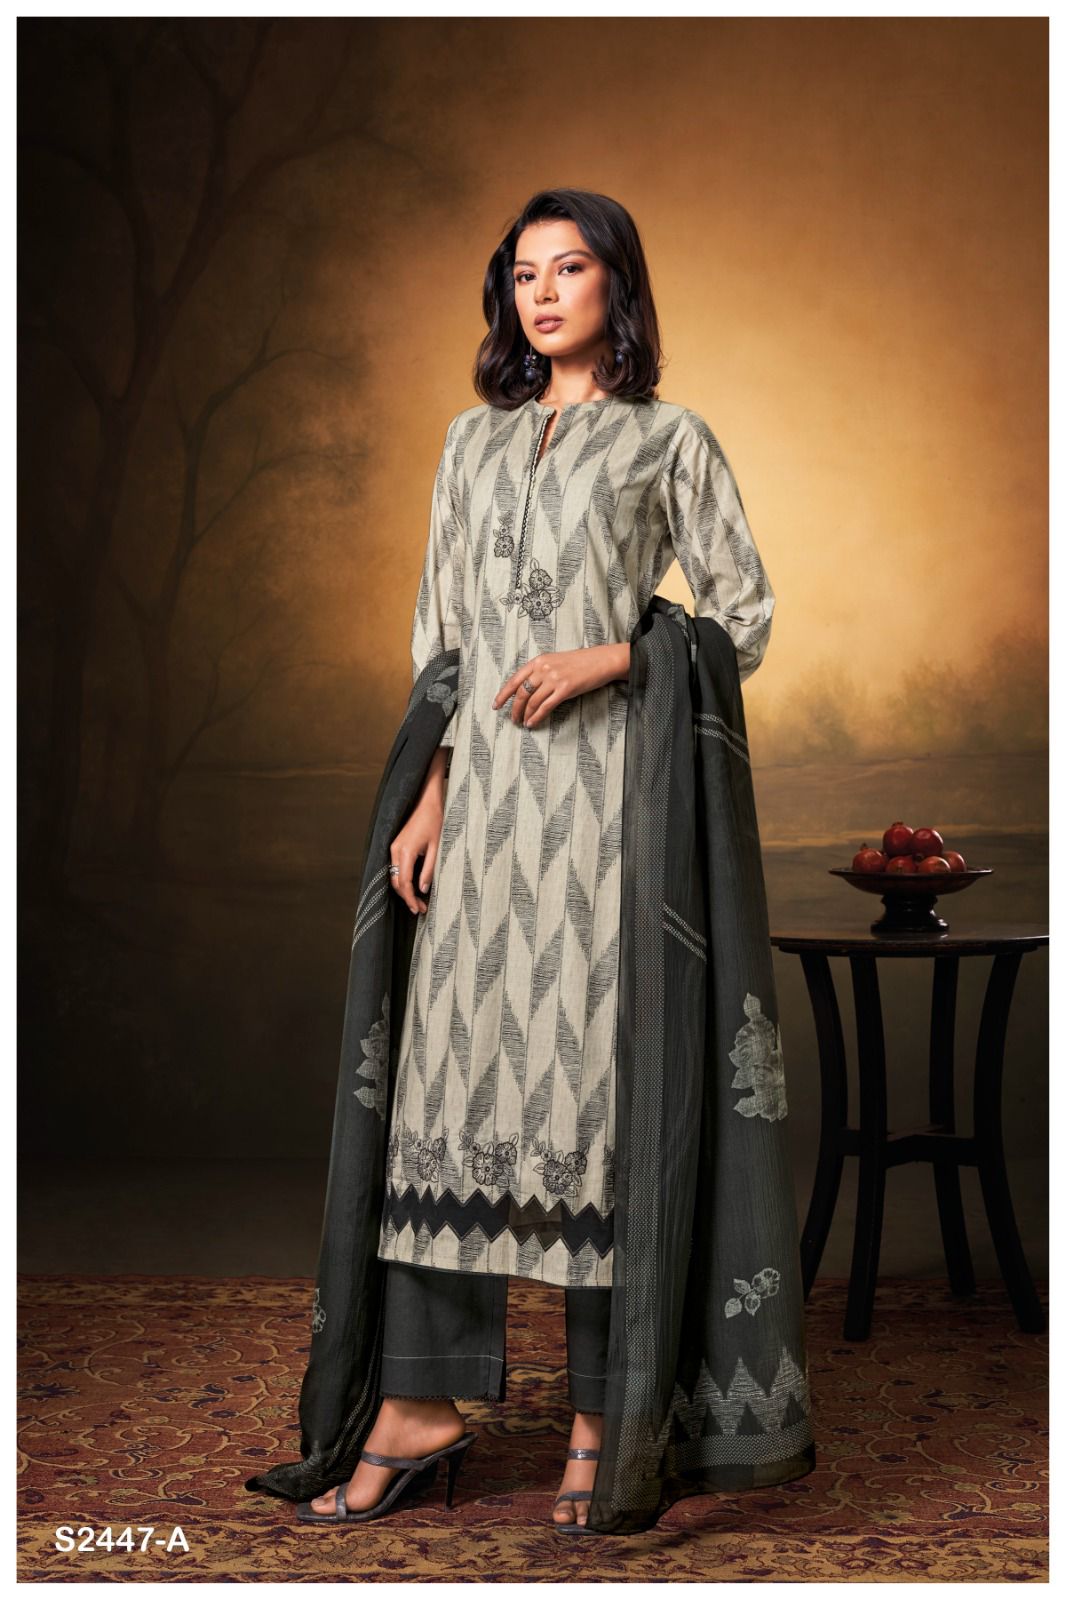 Humsiha 2447 Ganga Cotton Plazzo Style Suits Supplier India